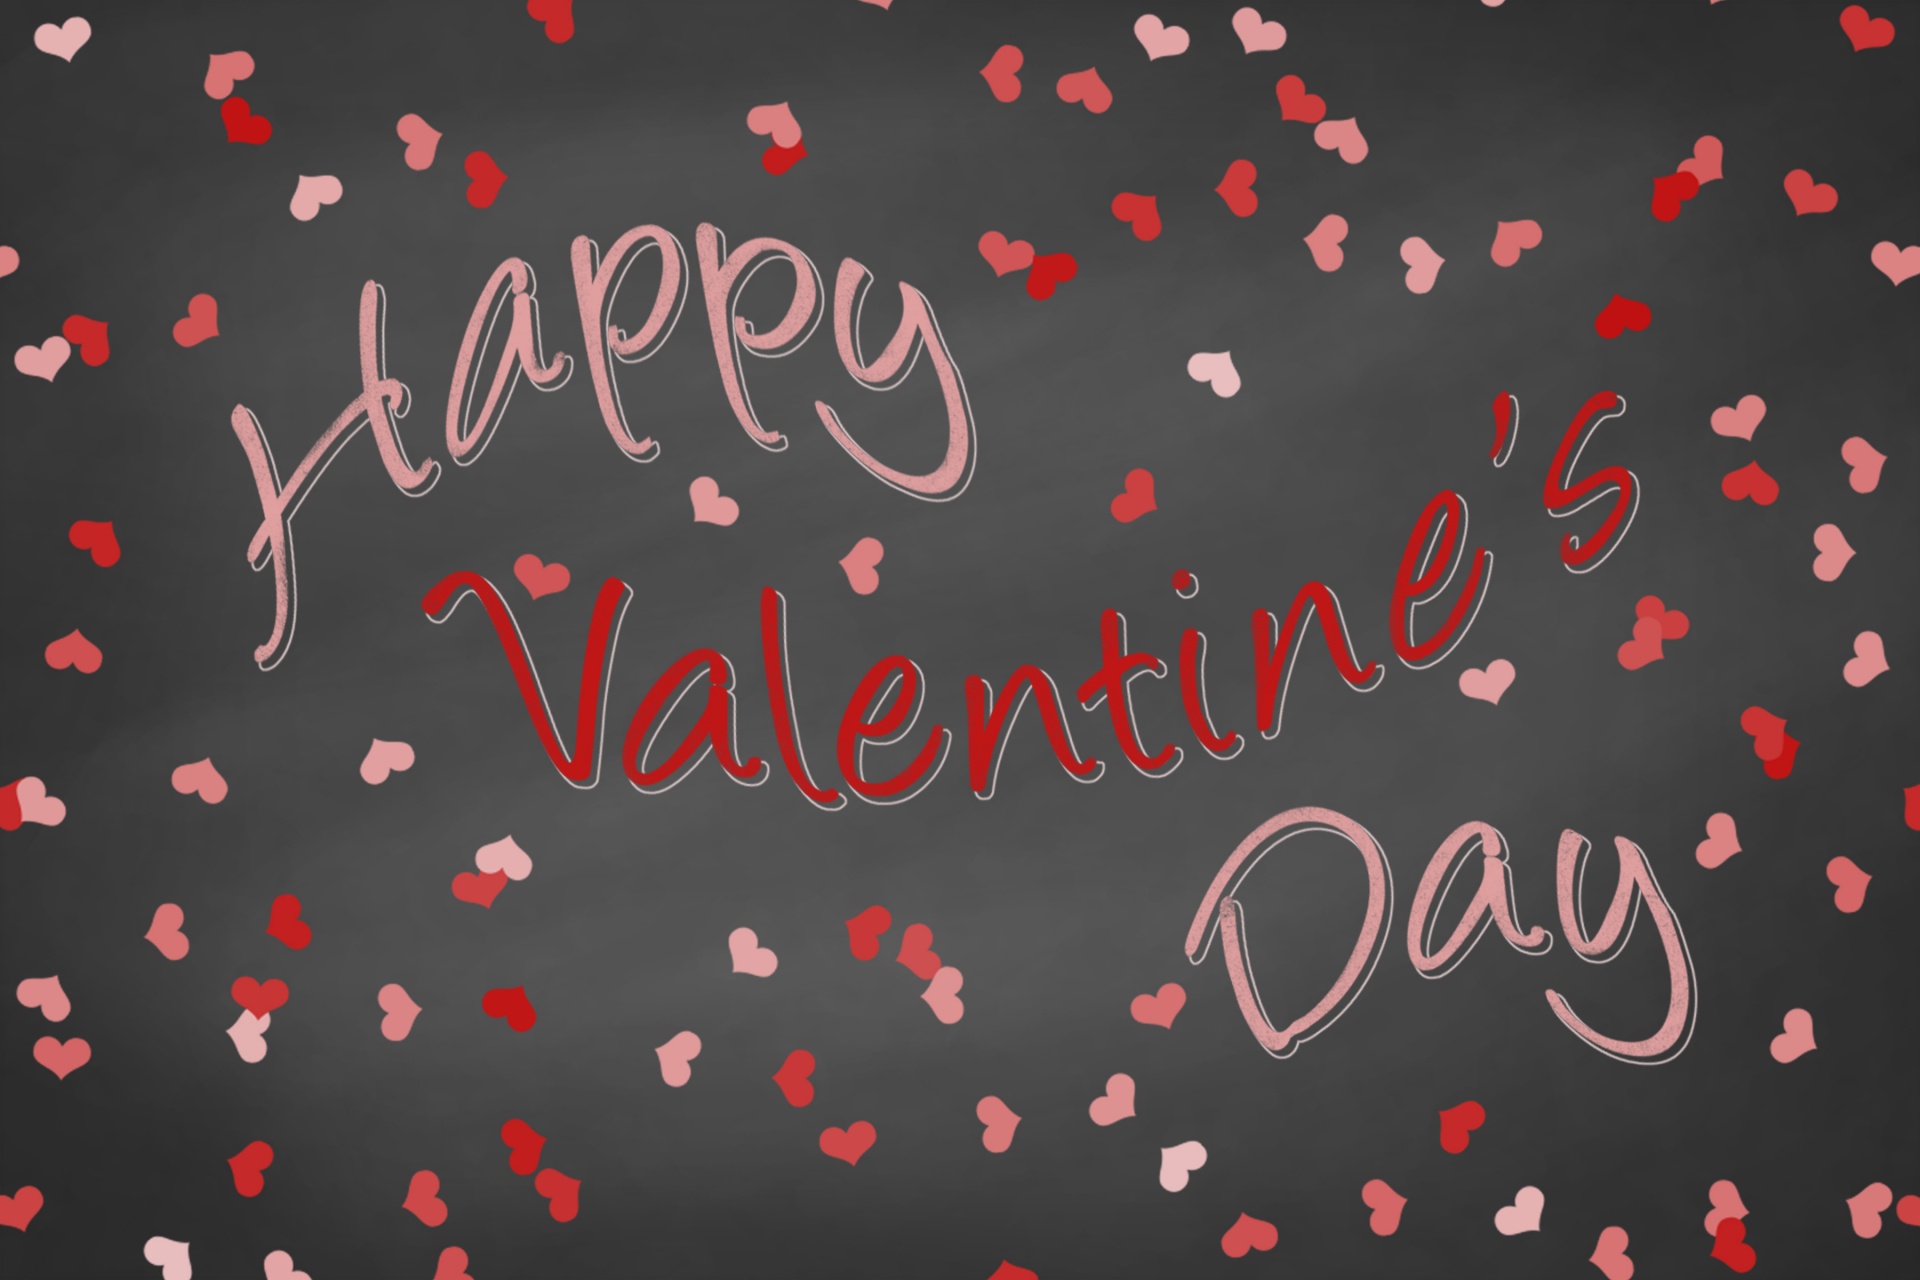 The Dark History of Valentines Day